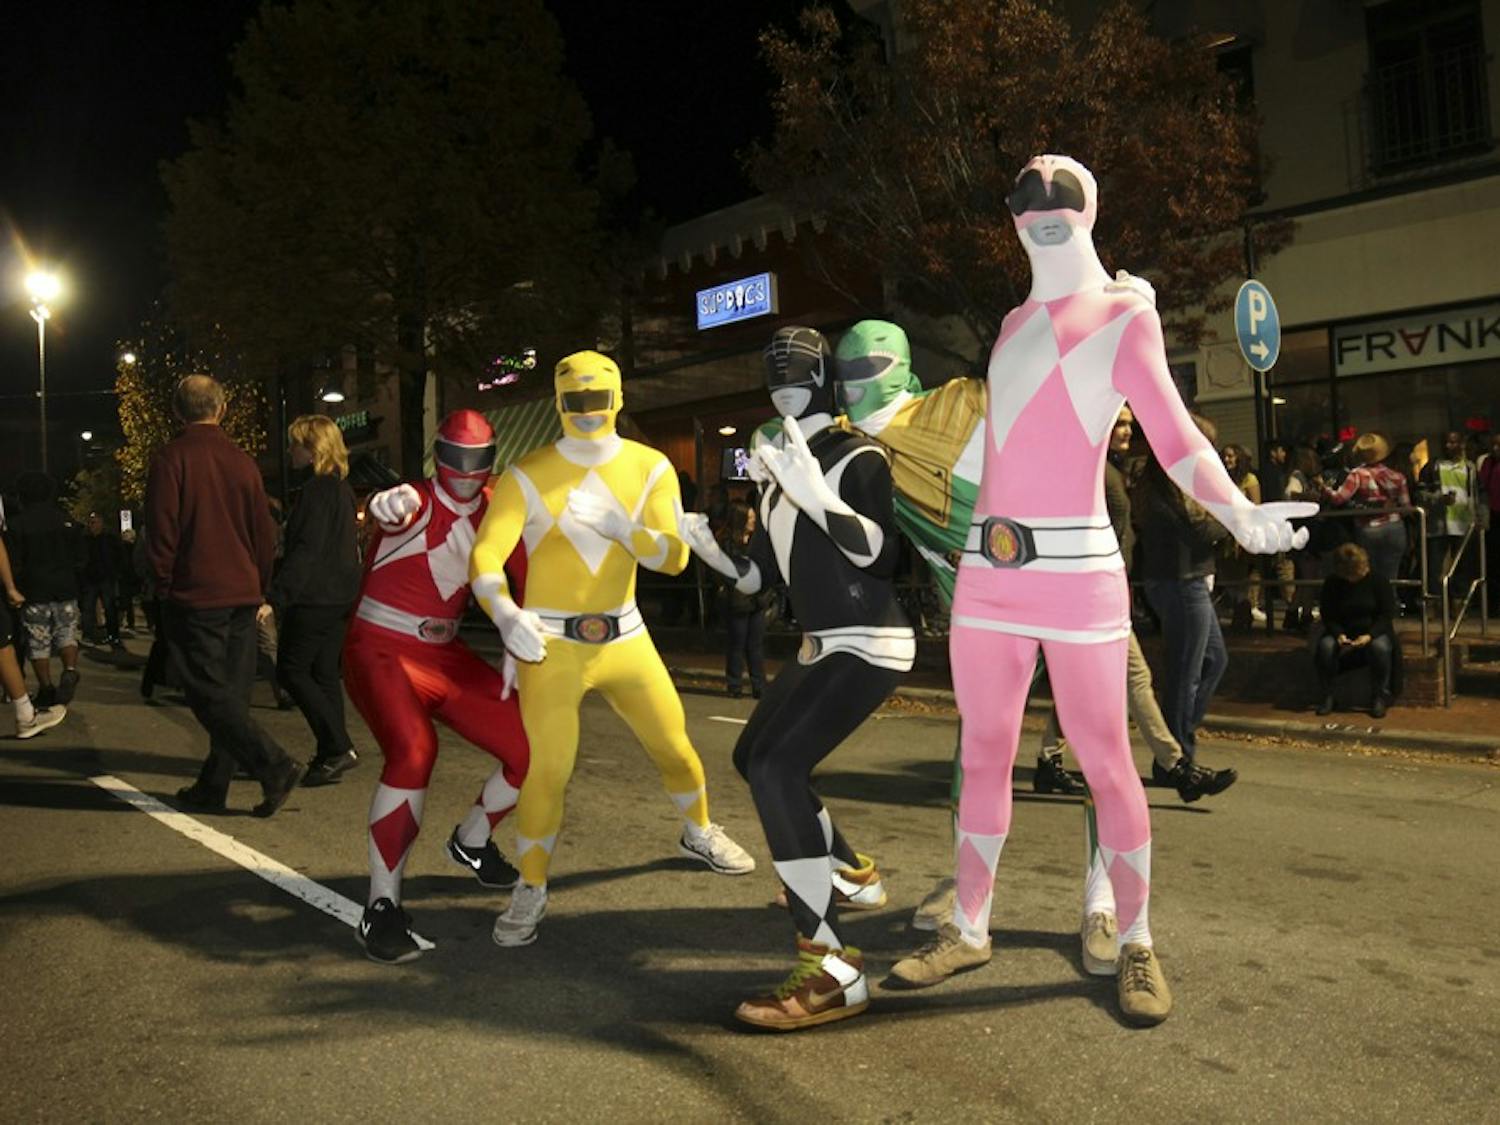 Halloween festivities on Franklin Street: The Power Rangers made an appearance on Franklin Street Saturday night